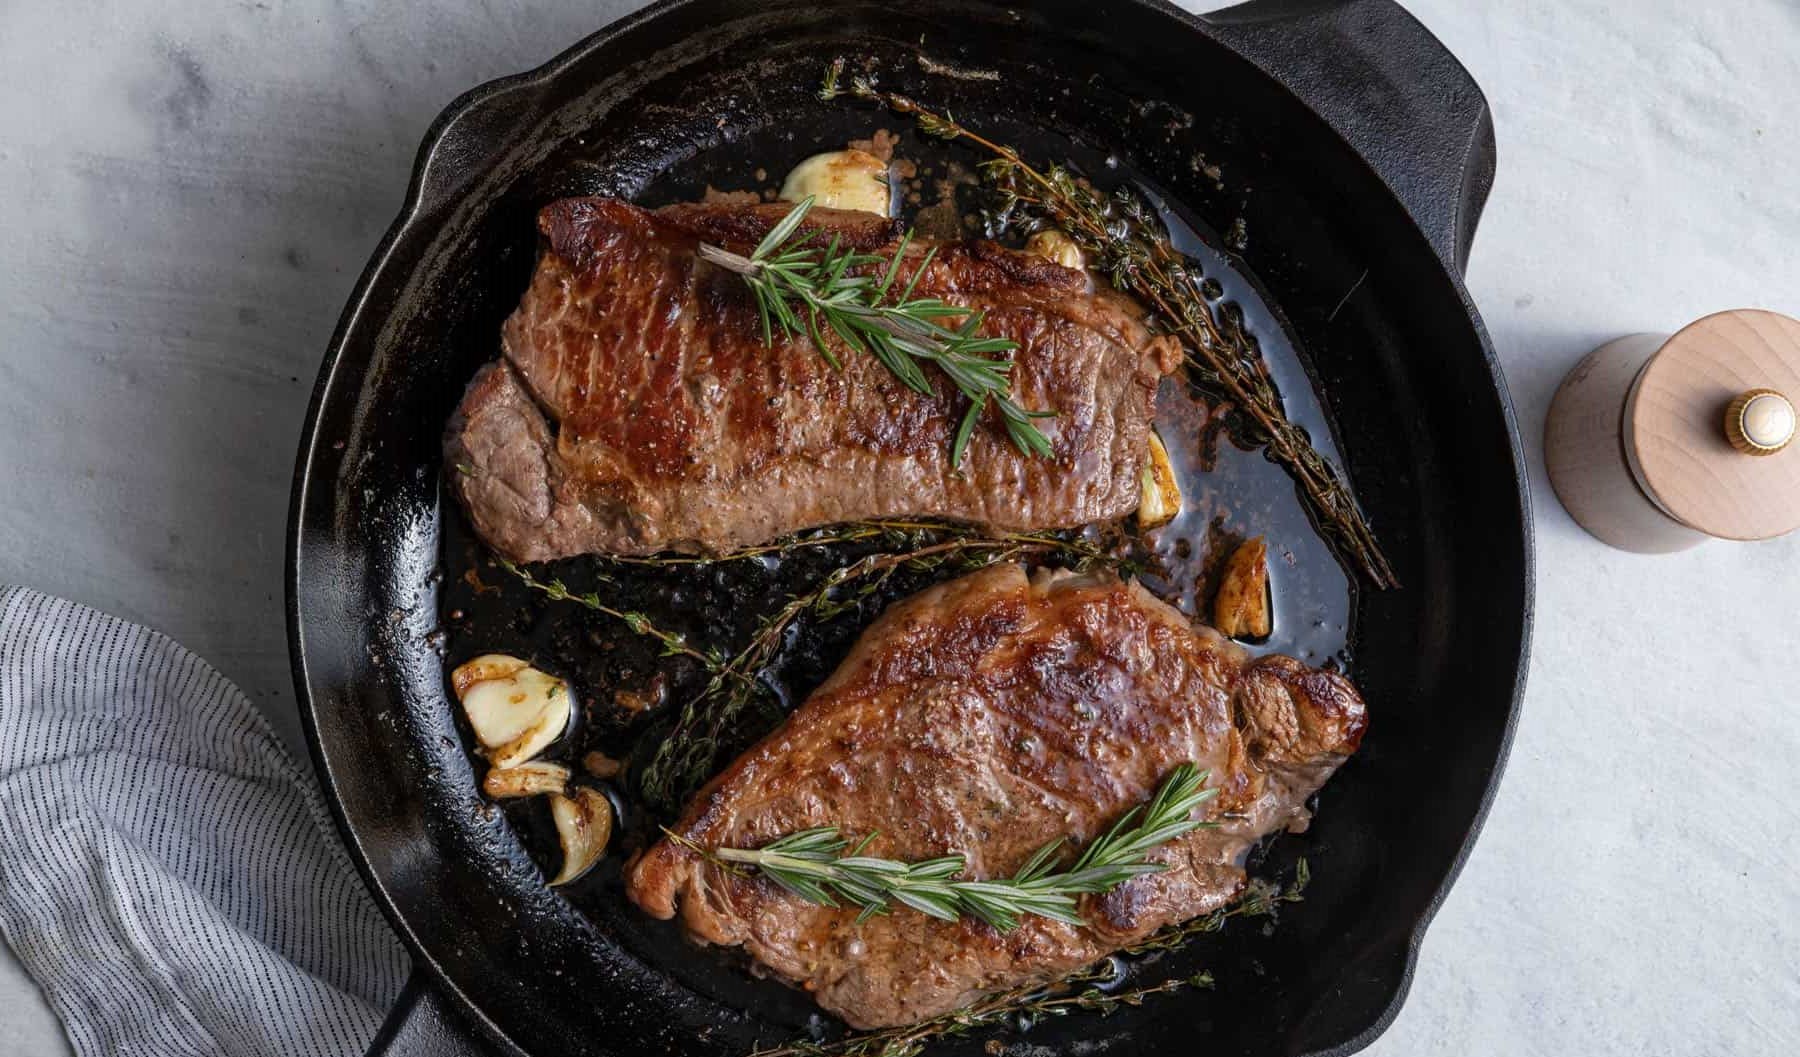 How To Cook Steak Medium Rare In Electric Skillet